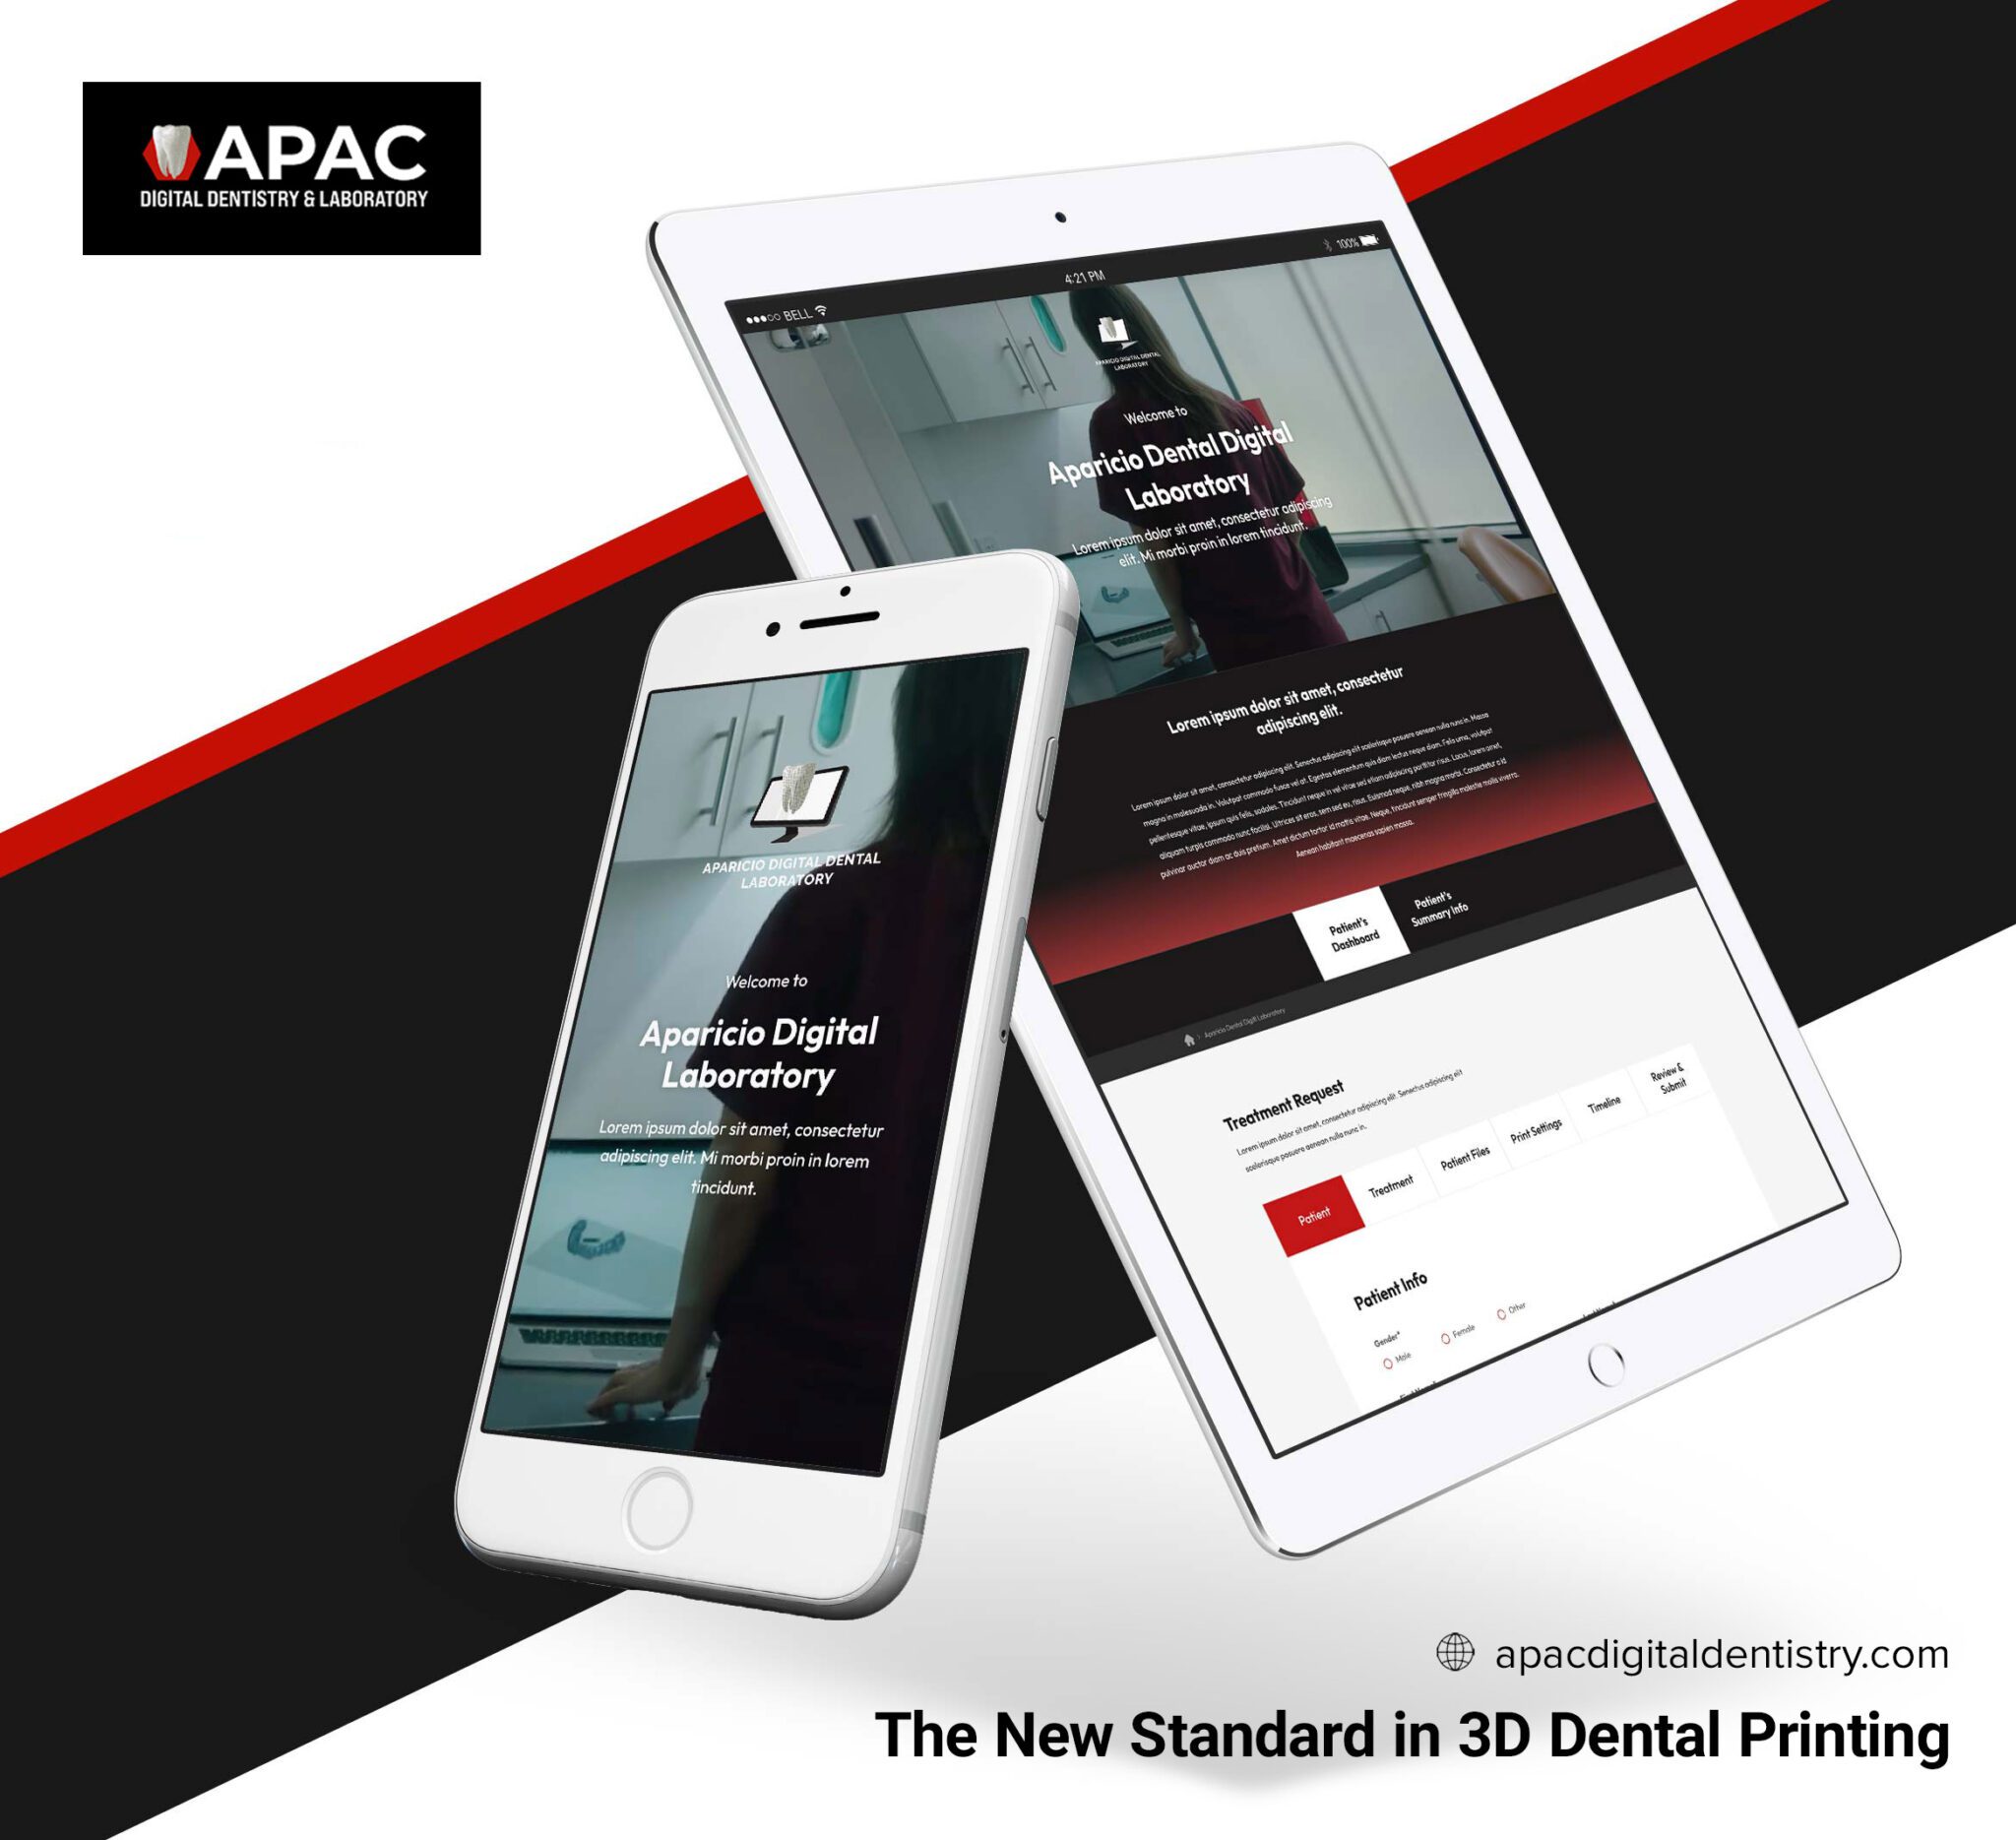 APAC Digital Dentistry & Laboratory Mobile Presenter